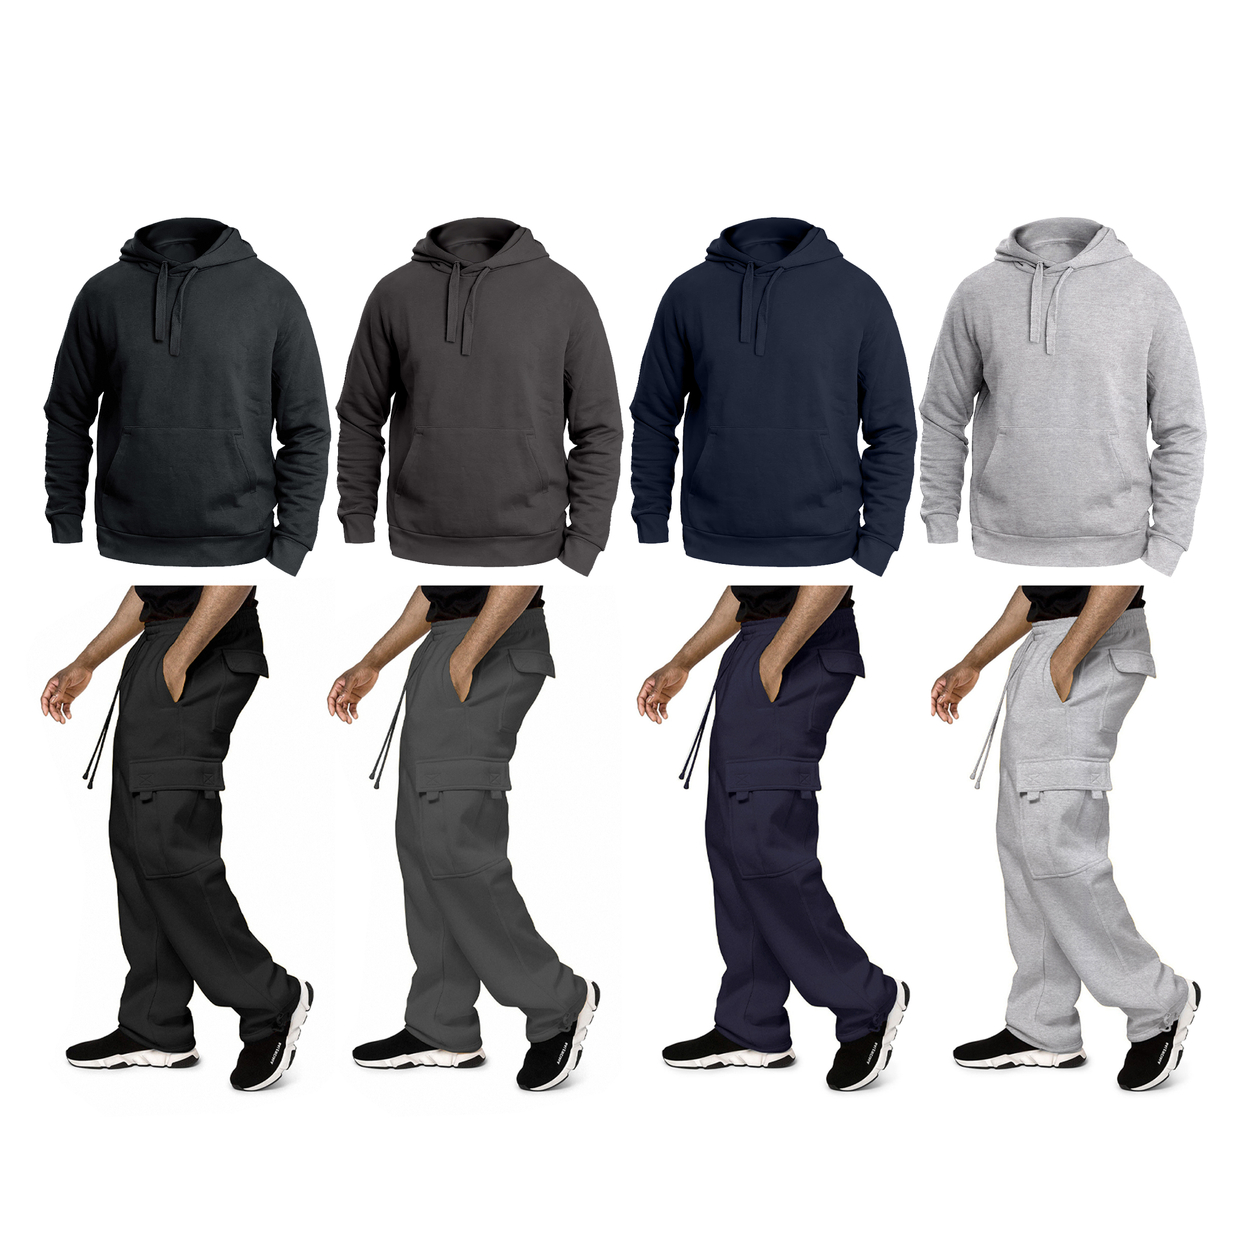 Men's Big & Tall Winter Warm Cozy Athletic Fleece Lined Multi-Pocket Cargo Sweatsuit - Charcoal, Large